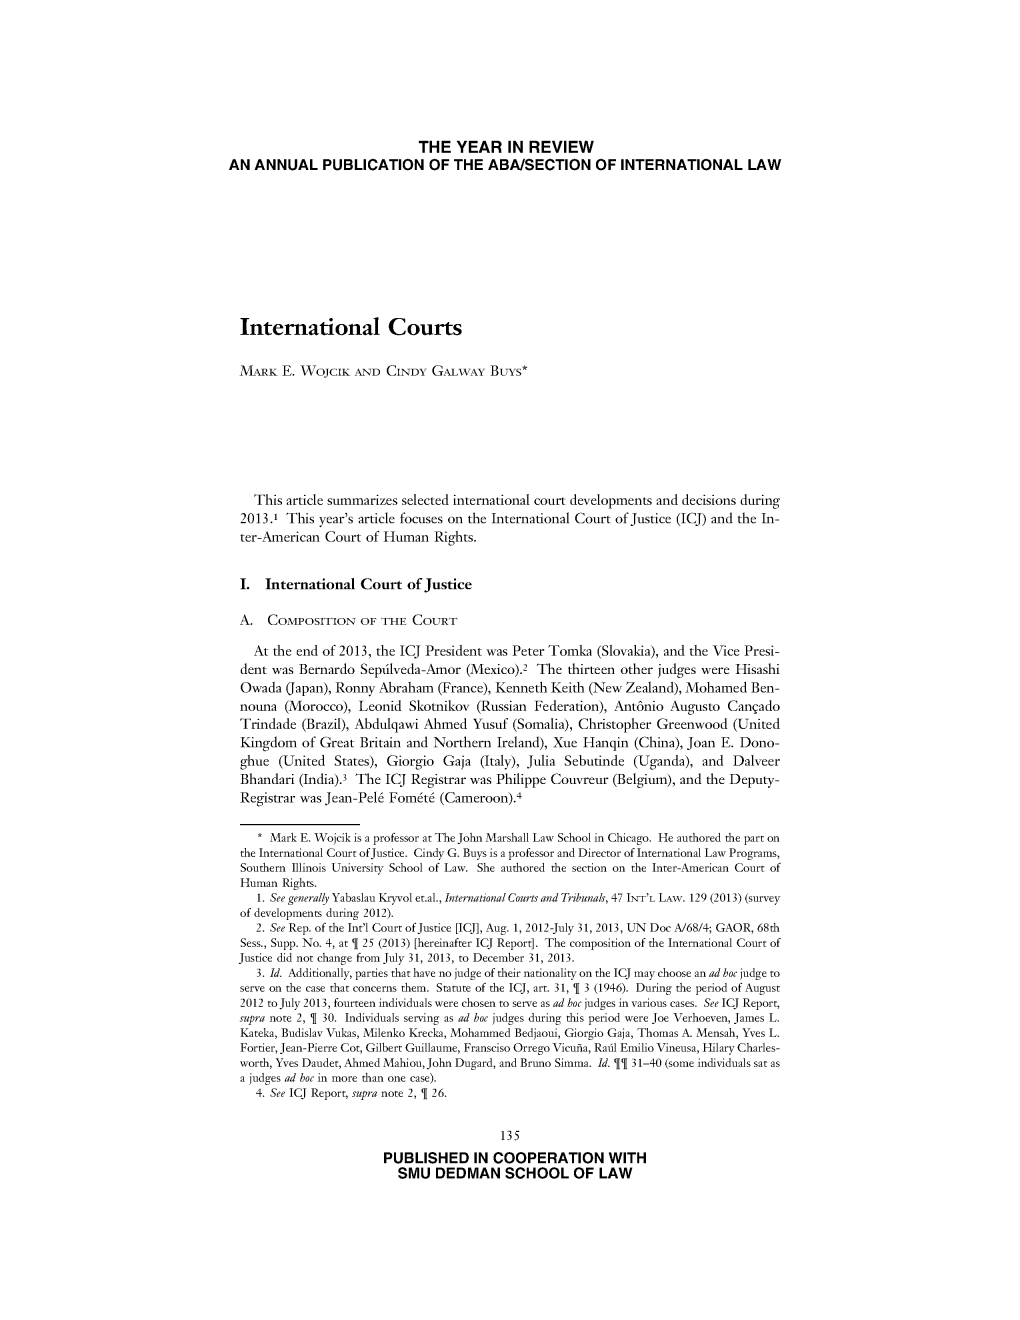 International Courts